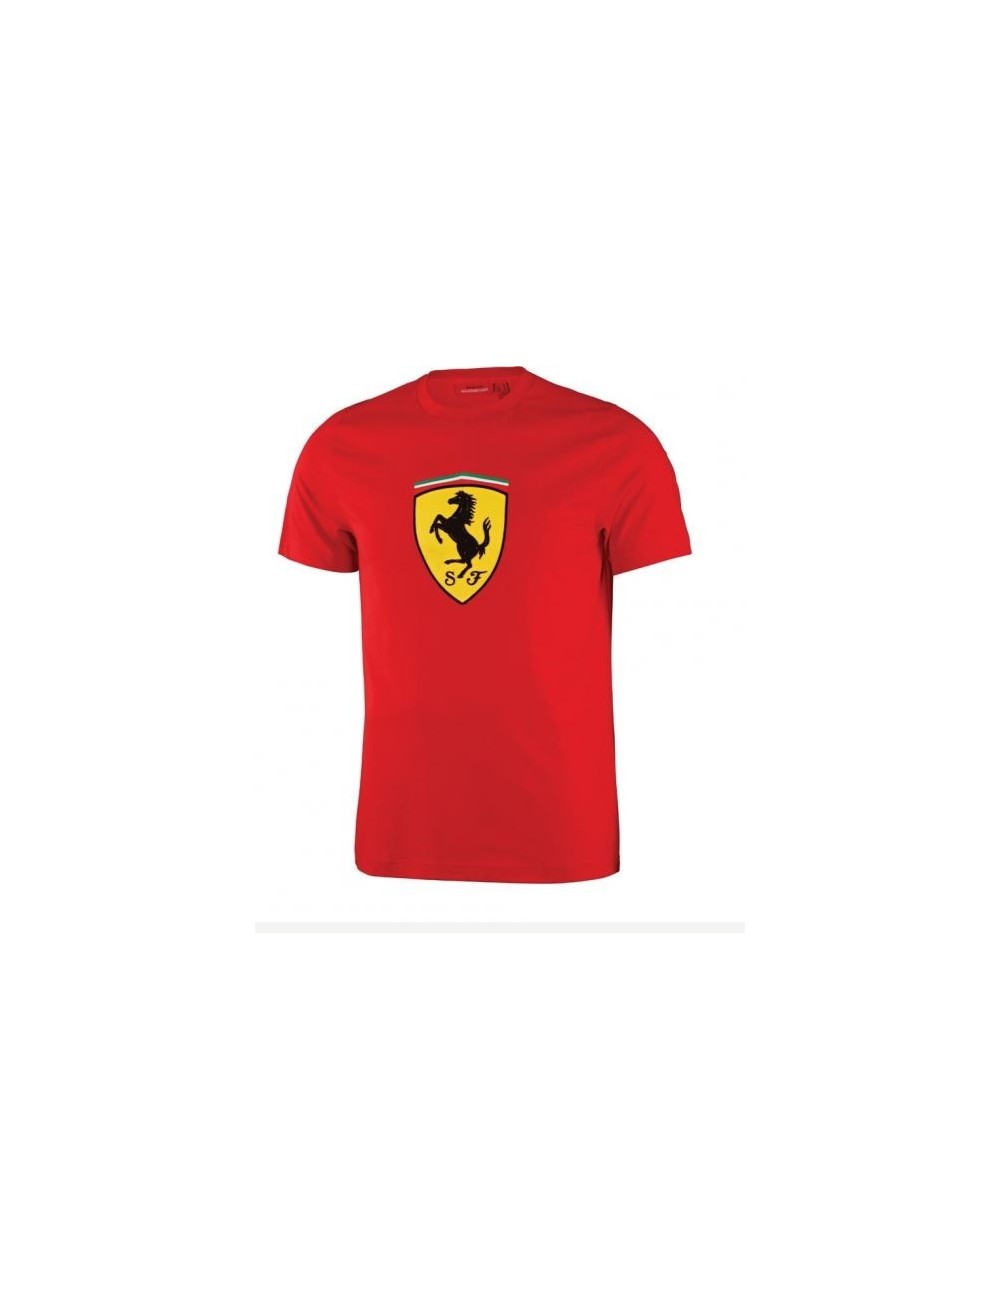 Tee shirt Ferrari rouge  classique